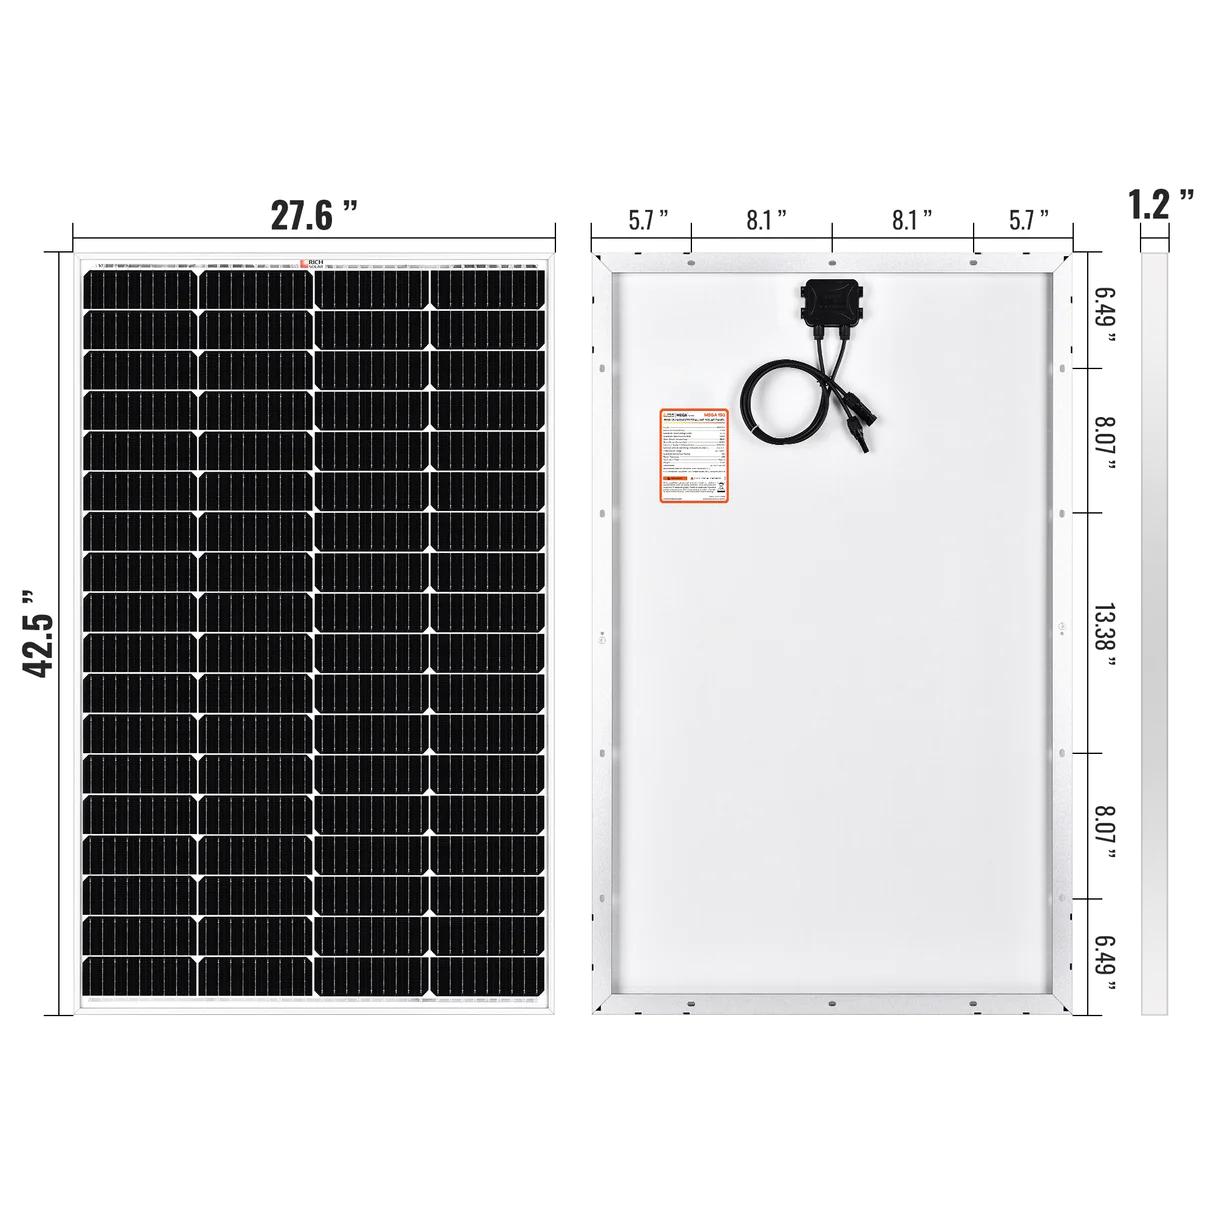 150 watt solar panel size - How big is 150 watt solar panel